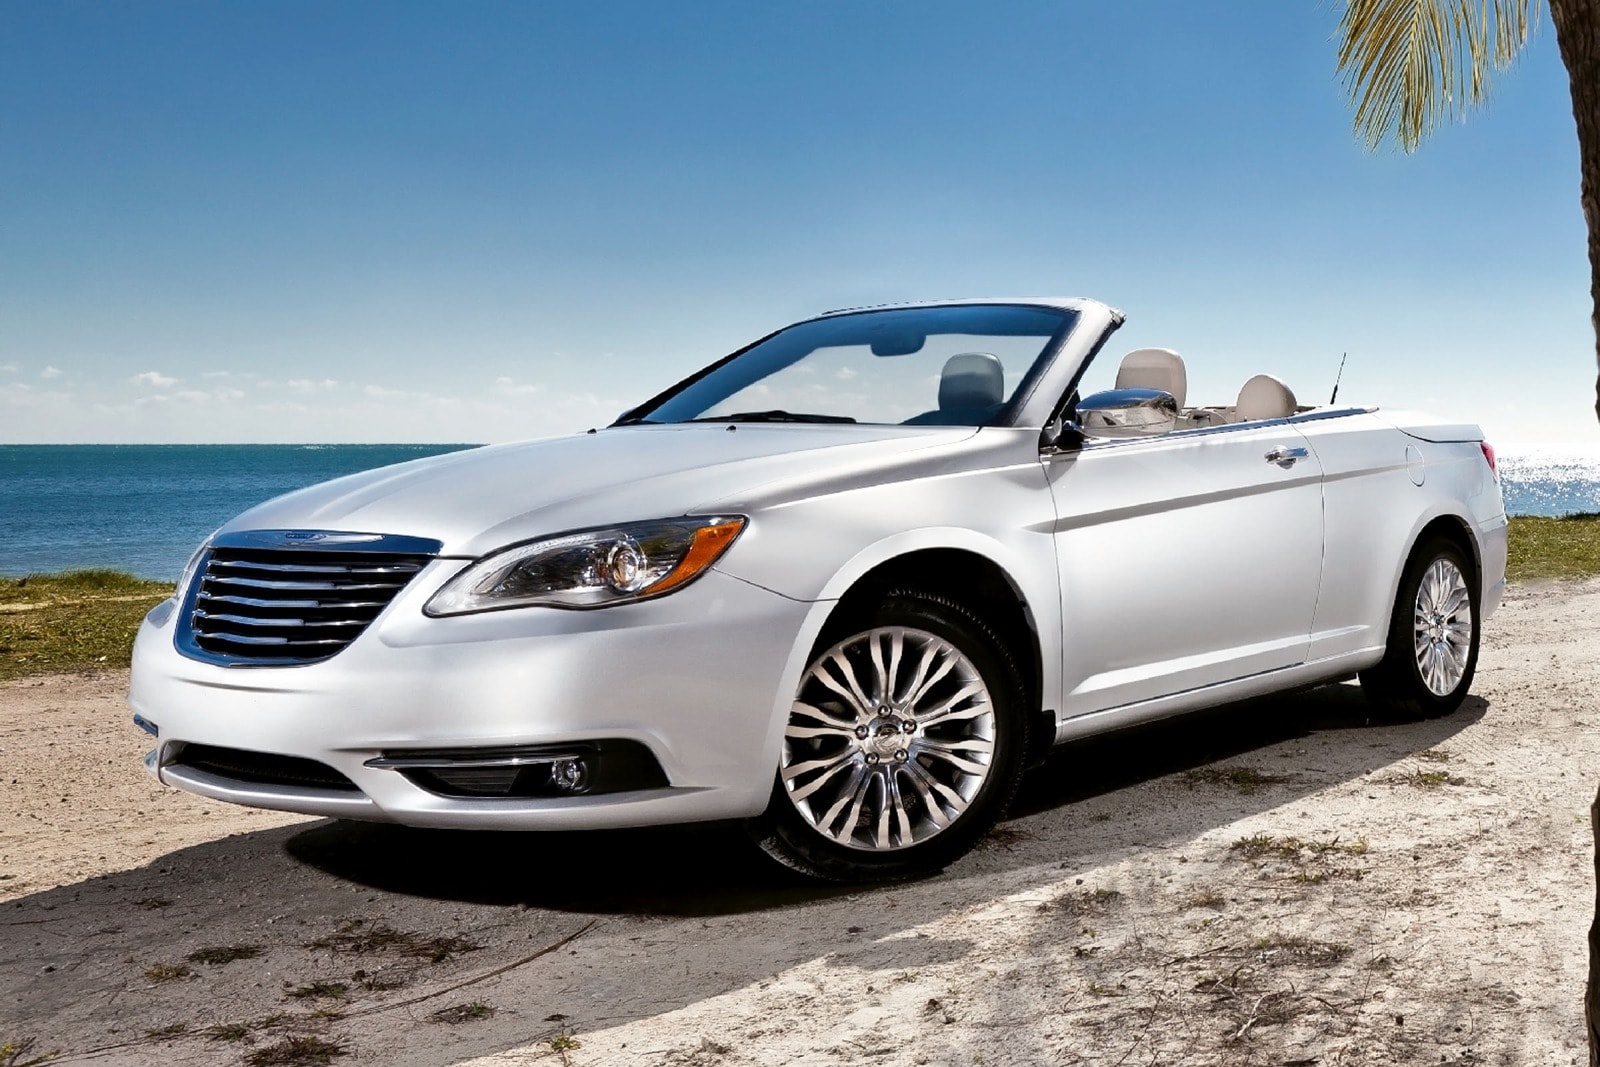 2013 Chrysler 200 Review & Ratings | Edmunds